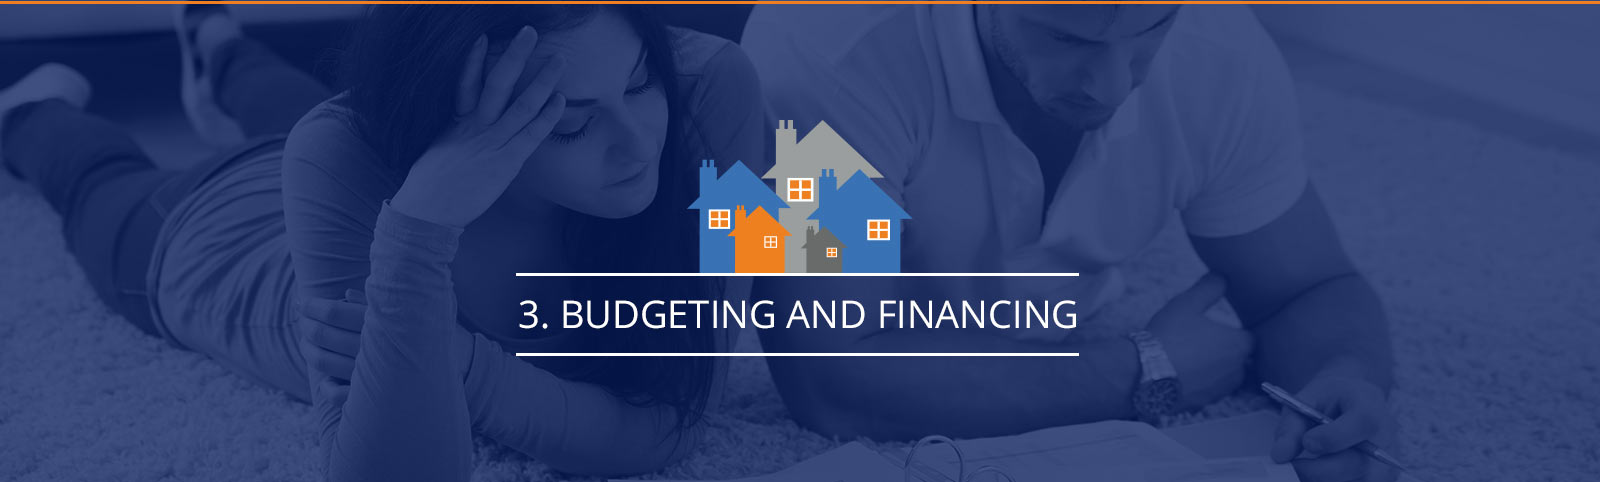 Budgeting an financing